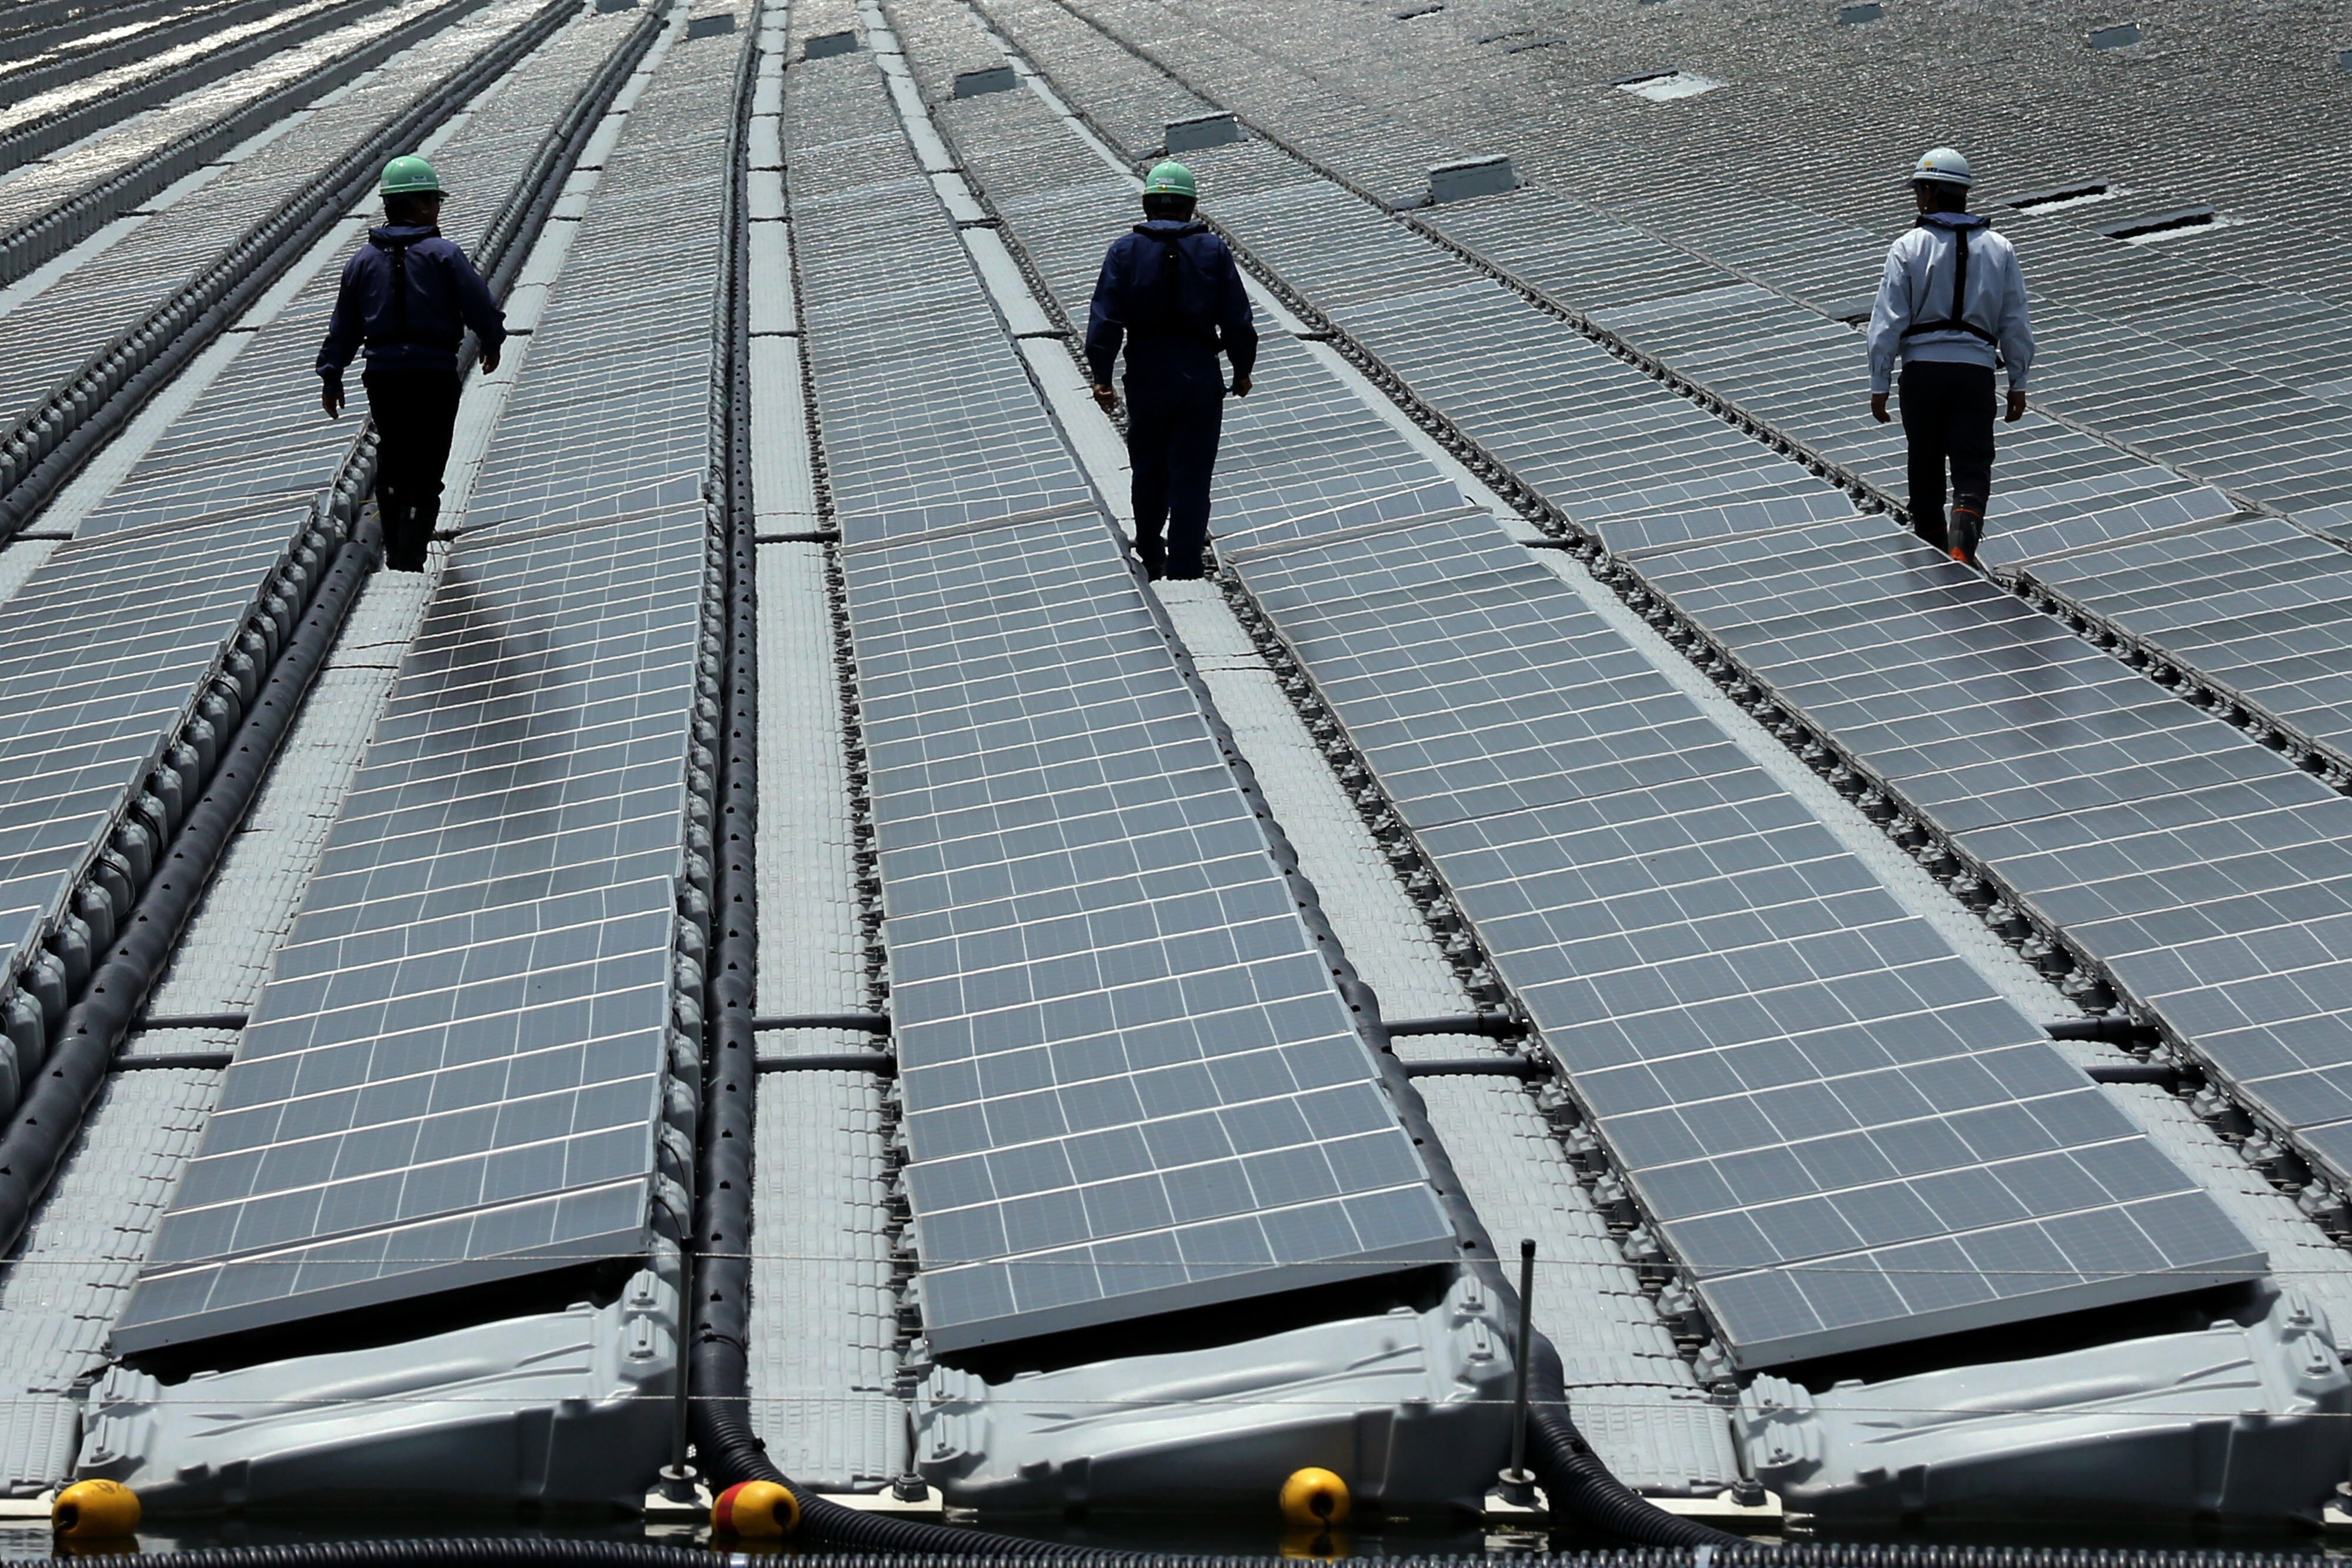 Enfinity Global illuminates Japan’s energy landscape with ¥29.2 billion solar power project 